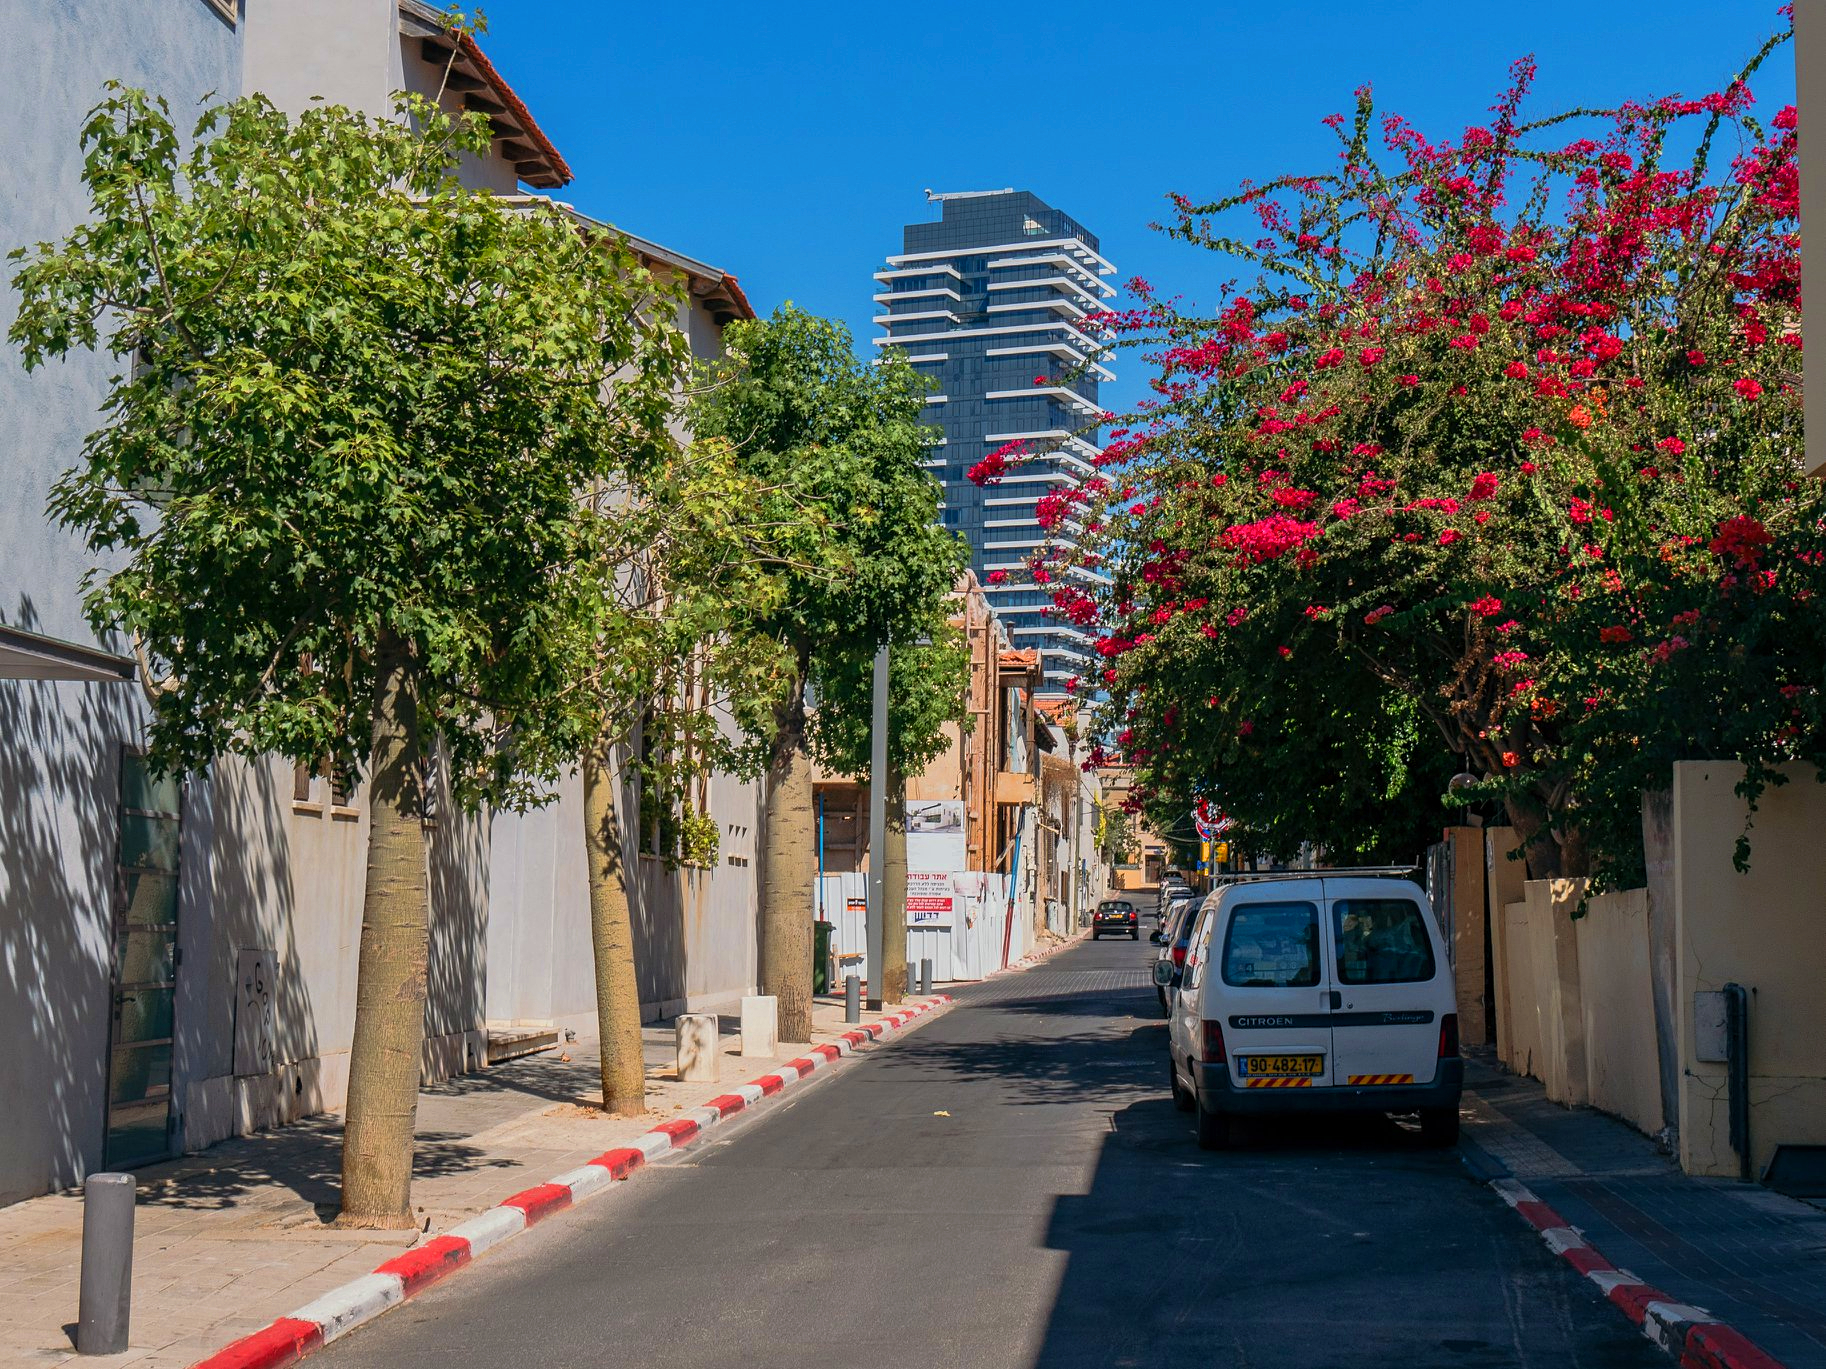 Red and white curb parking, Neve Tzedek, Tel Aviv, Israel